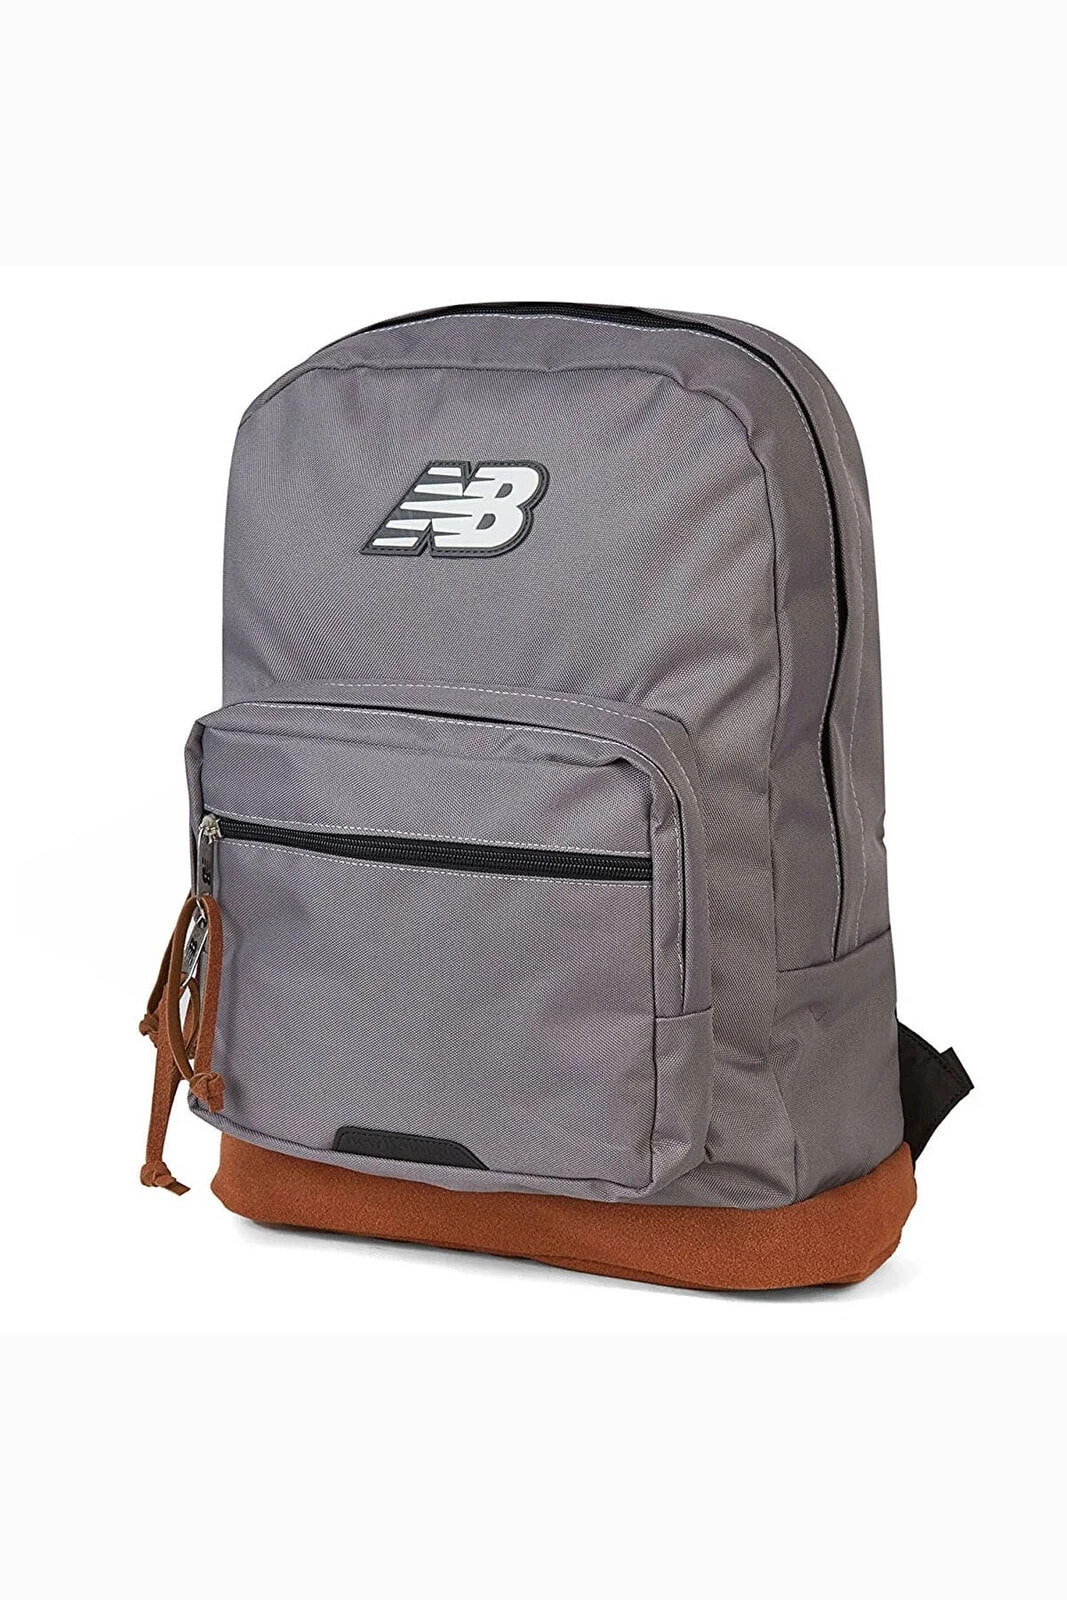 Çanta Nb Backpack Anb3202-ag